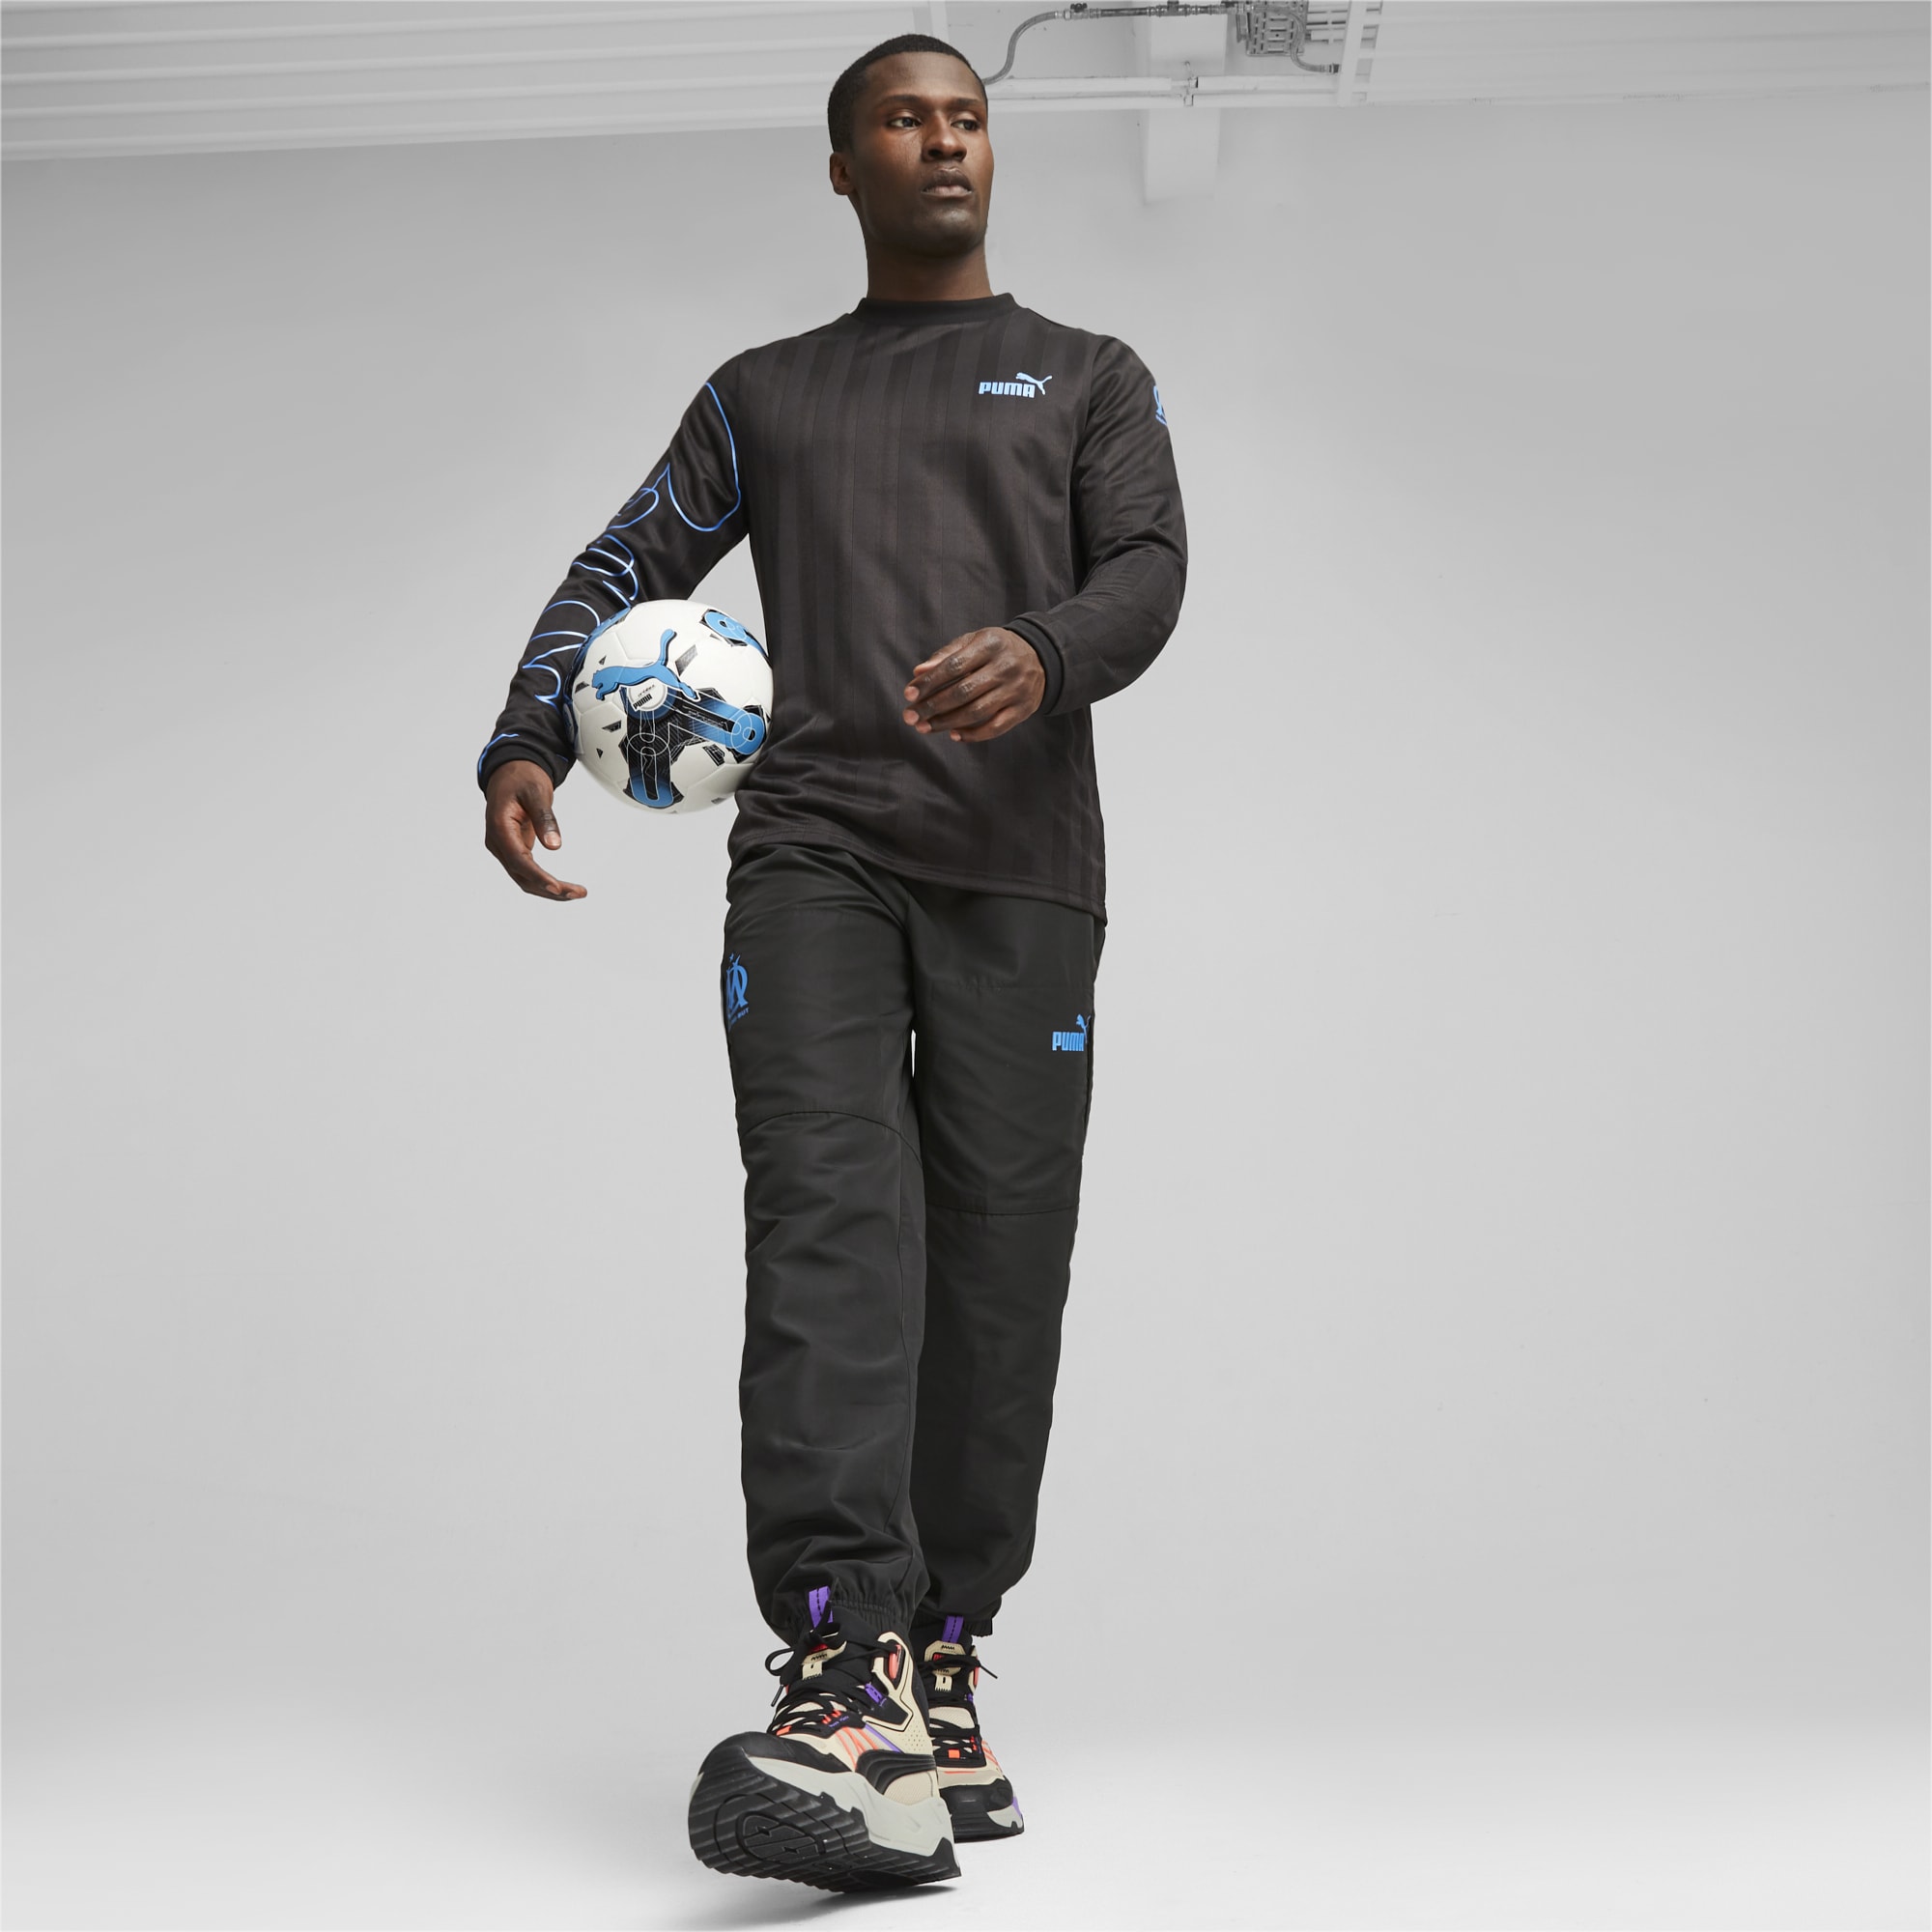 PUMA Olympique De Marseille Ftblstatement Track Pants, Black/Light Aqua, Size 3XL, Clothing